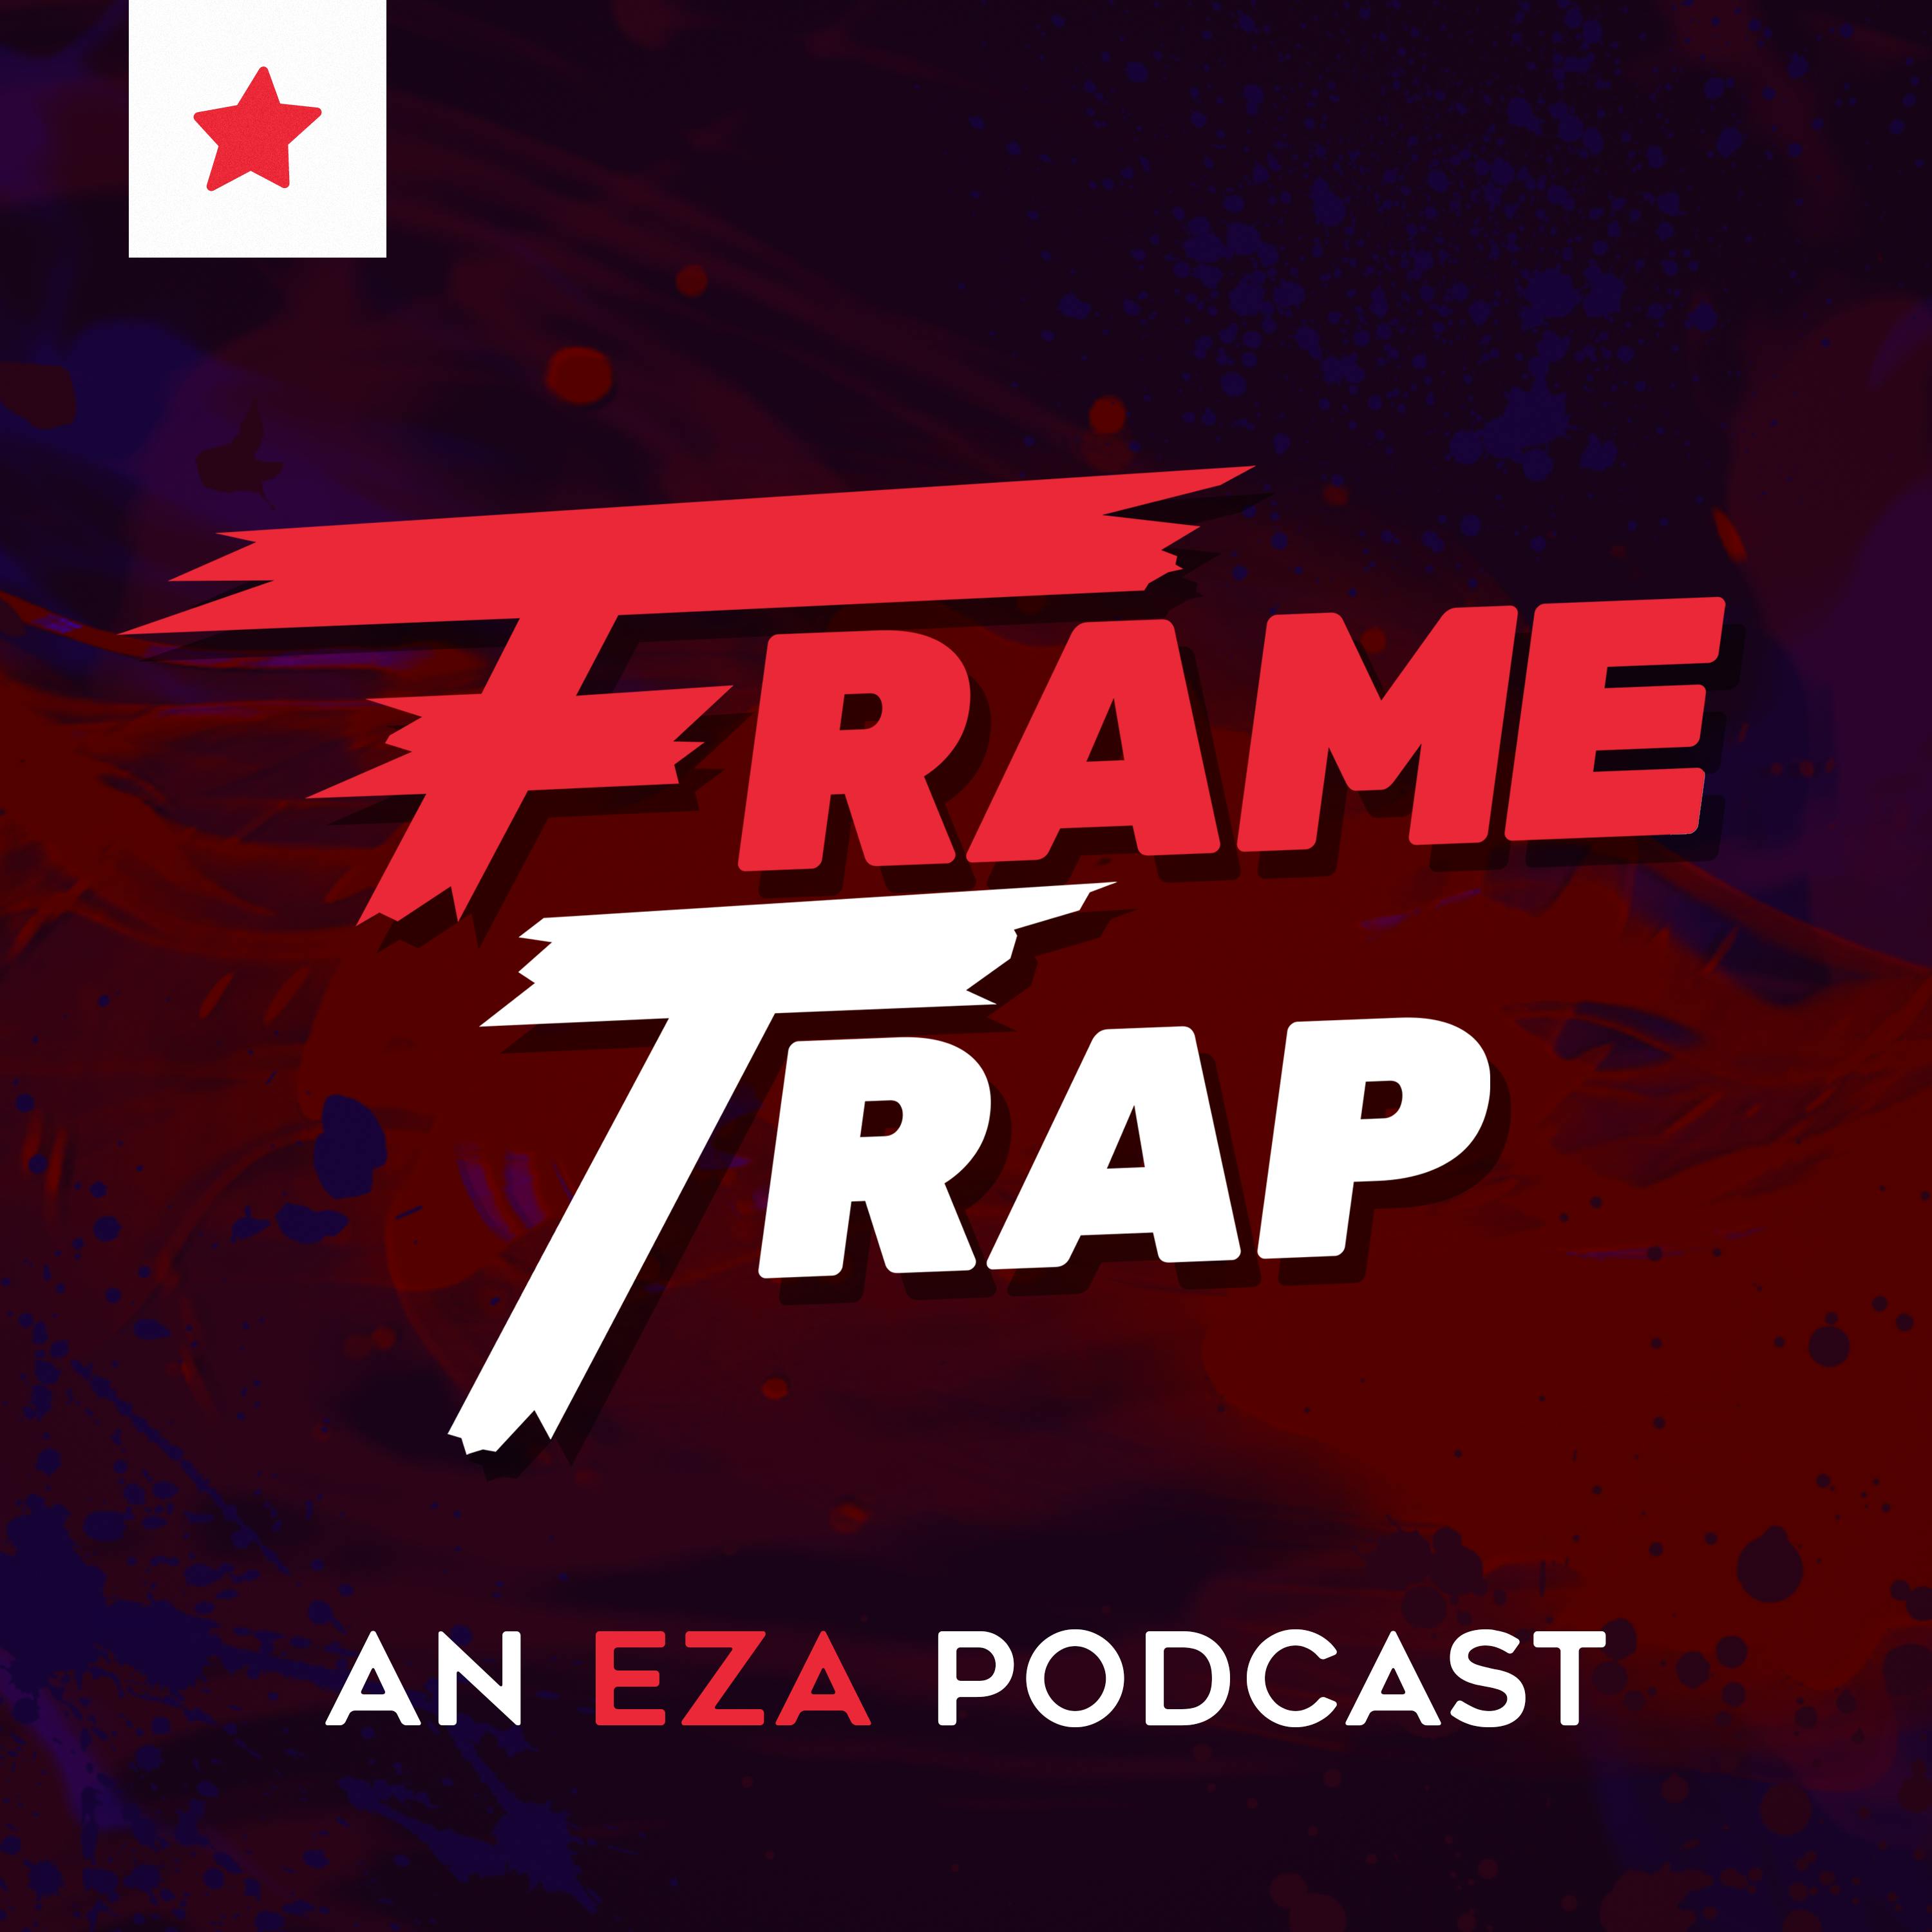 Frame Trap - Episode 191 